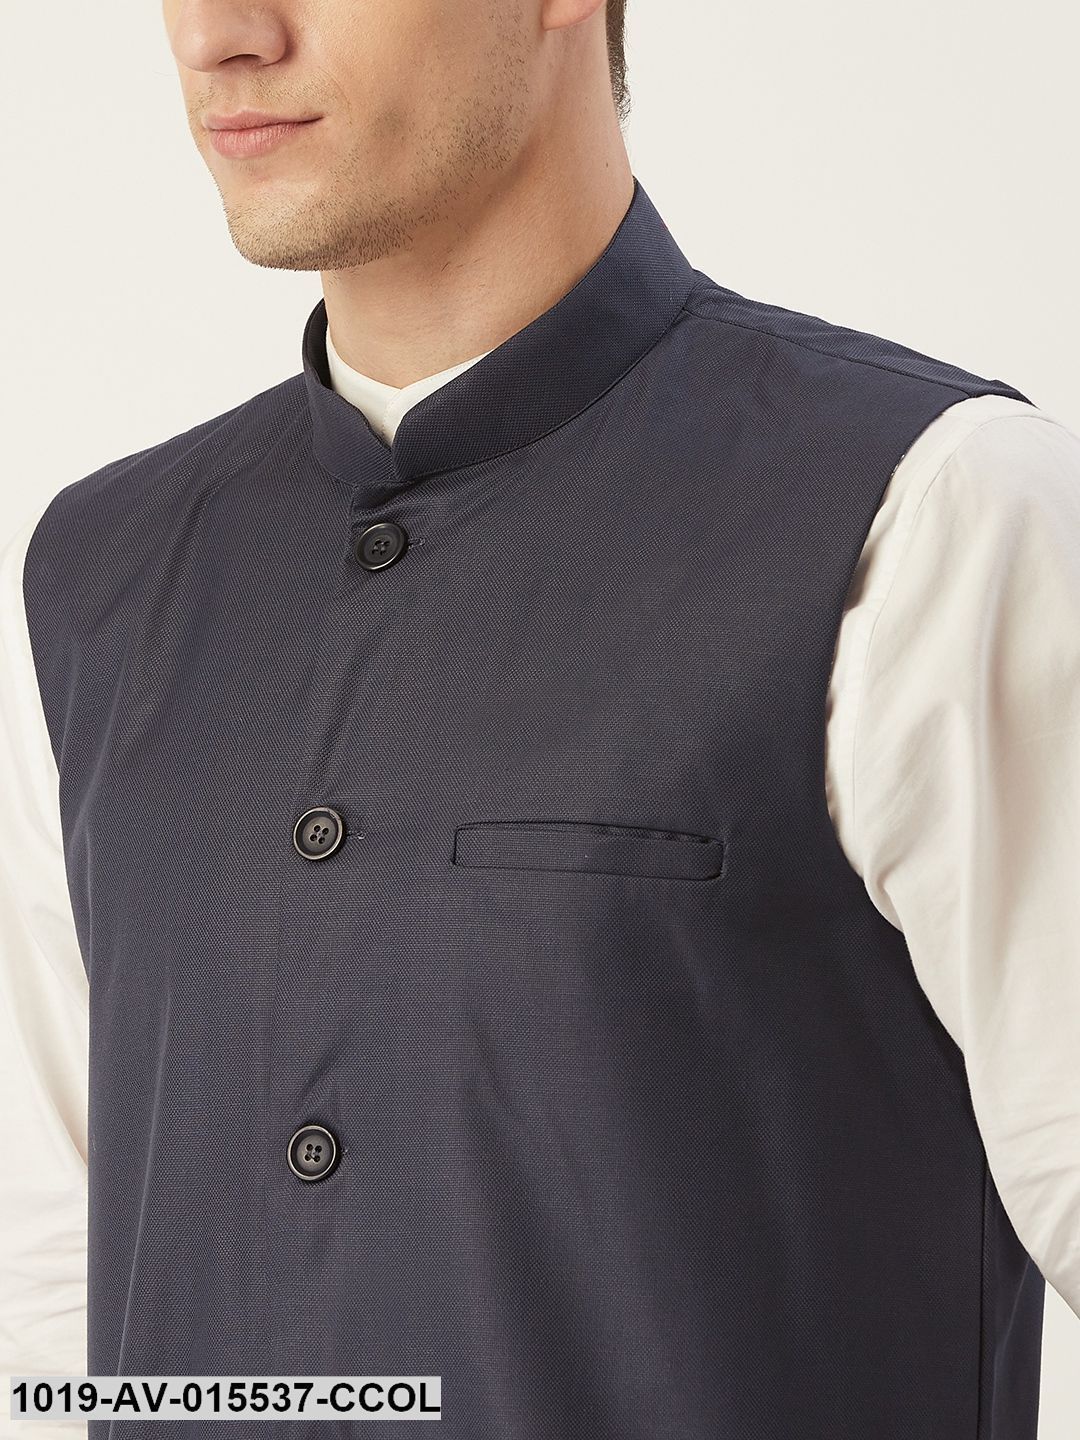 Men's Cotton Blend Charcoal Grey Solid Nehru Jacket - Sojanya